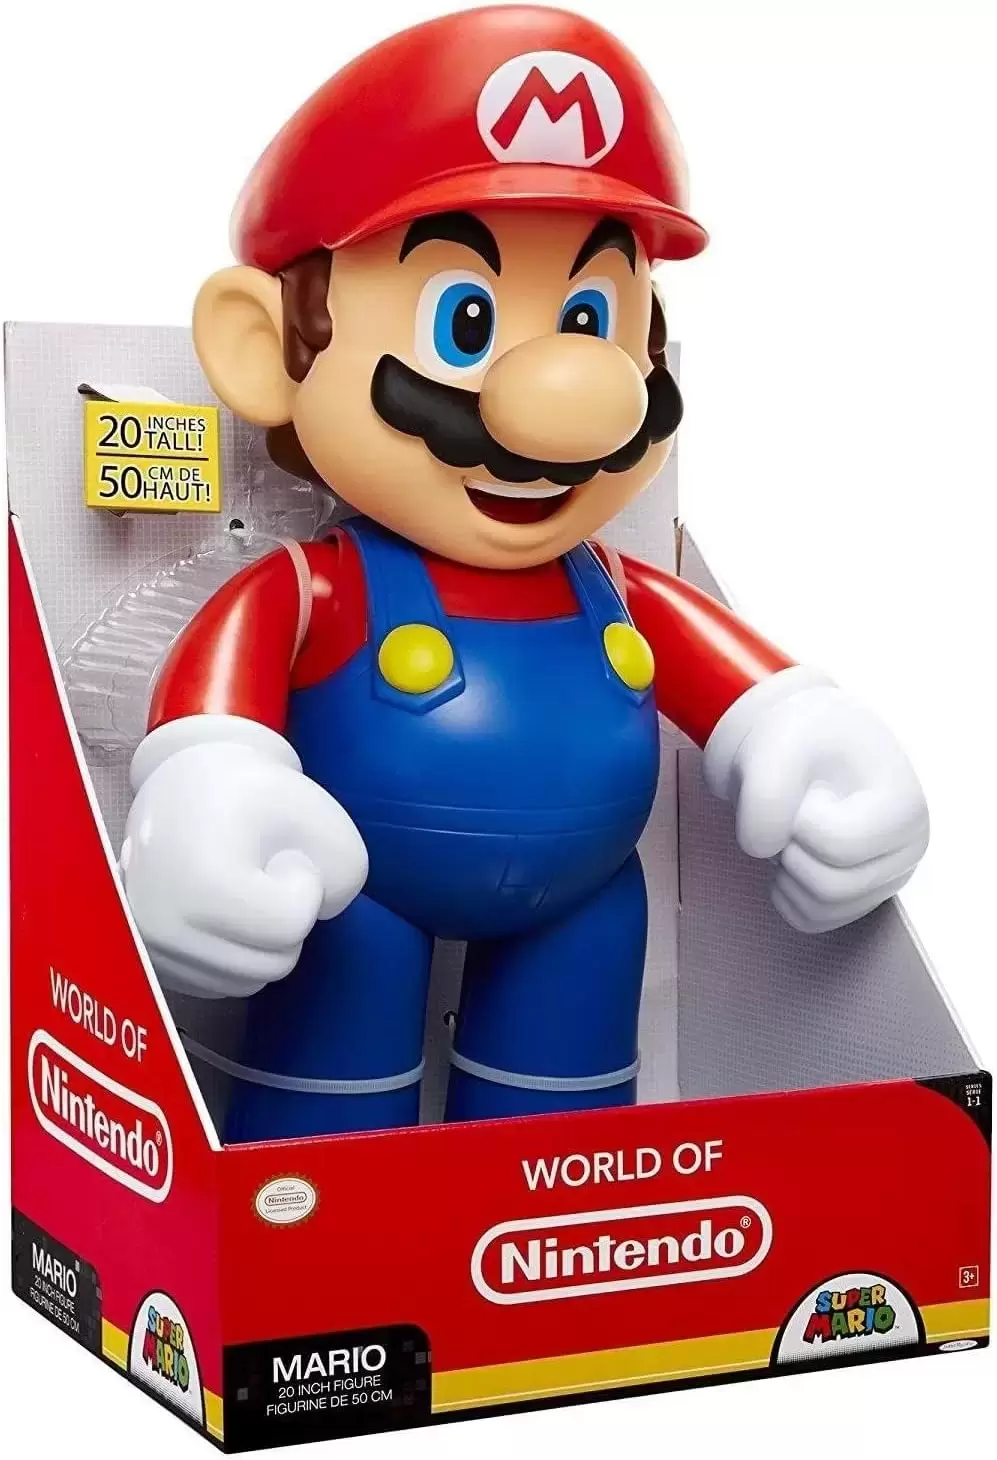 World of Nintendo - Mario - 20 inch Figure